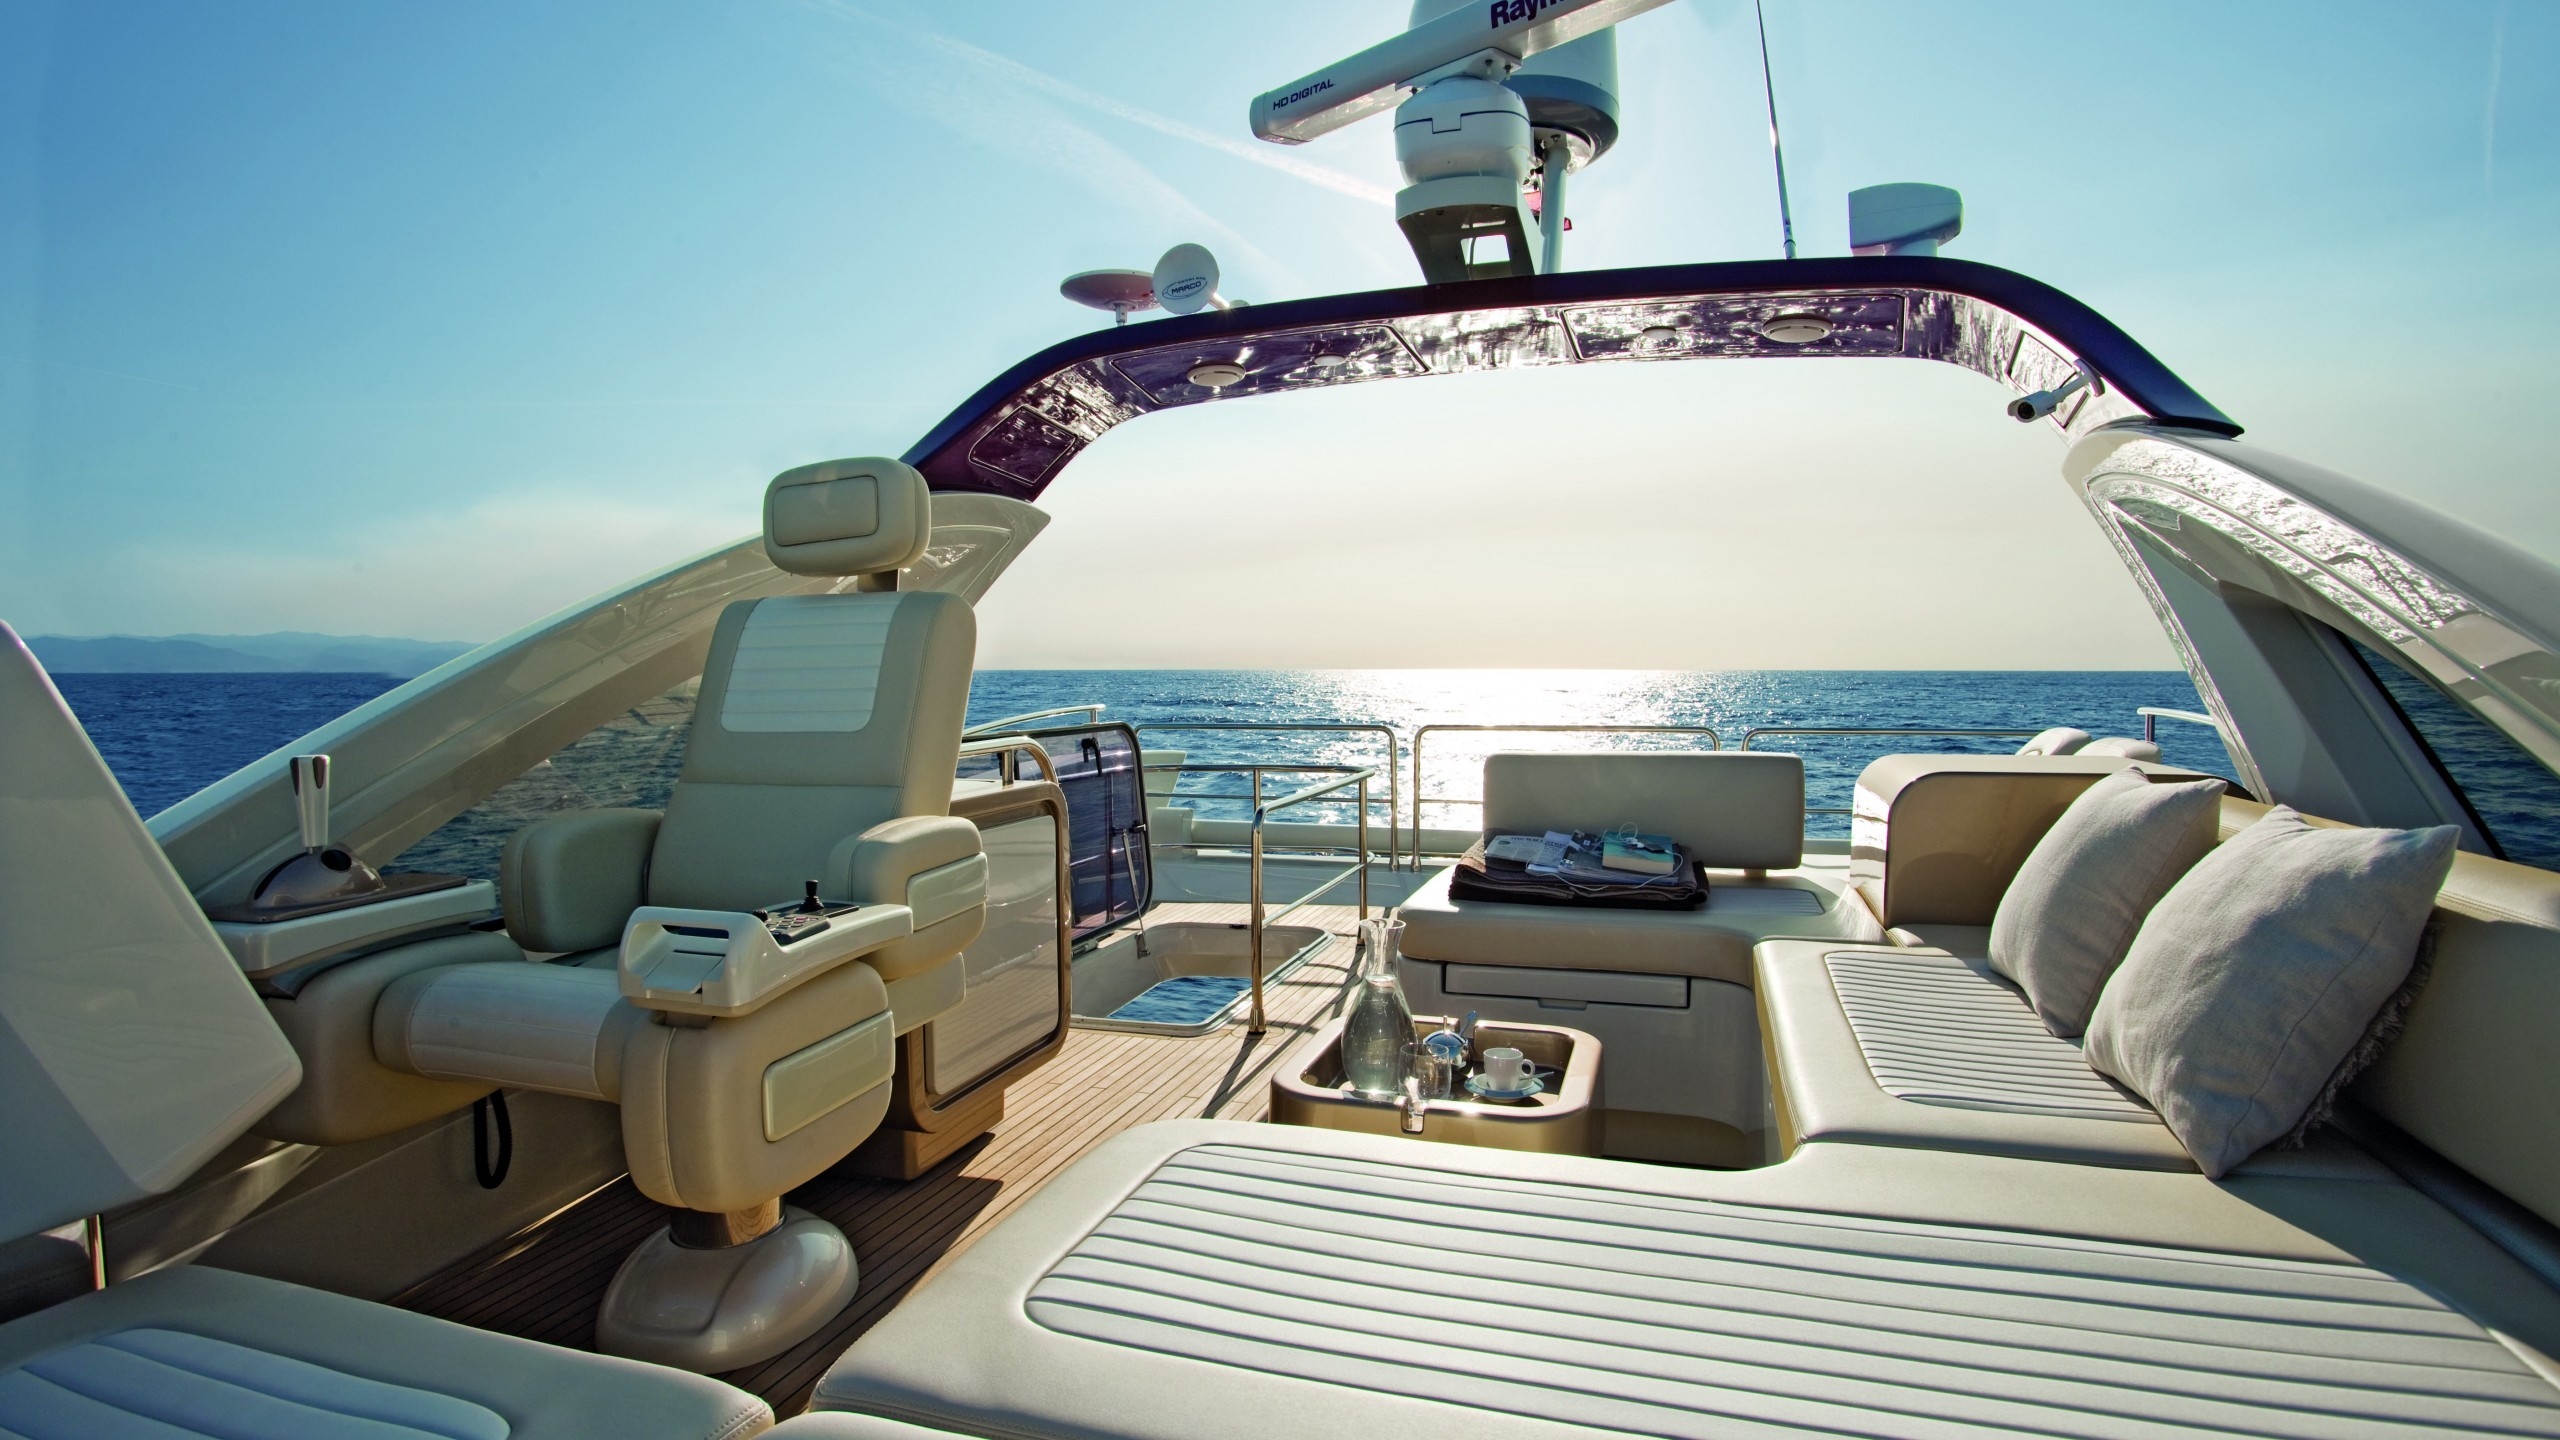 Lovely Luxury Yacht for 2560x1440 HDTV resolution